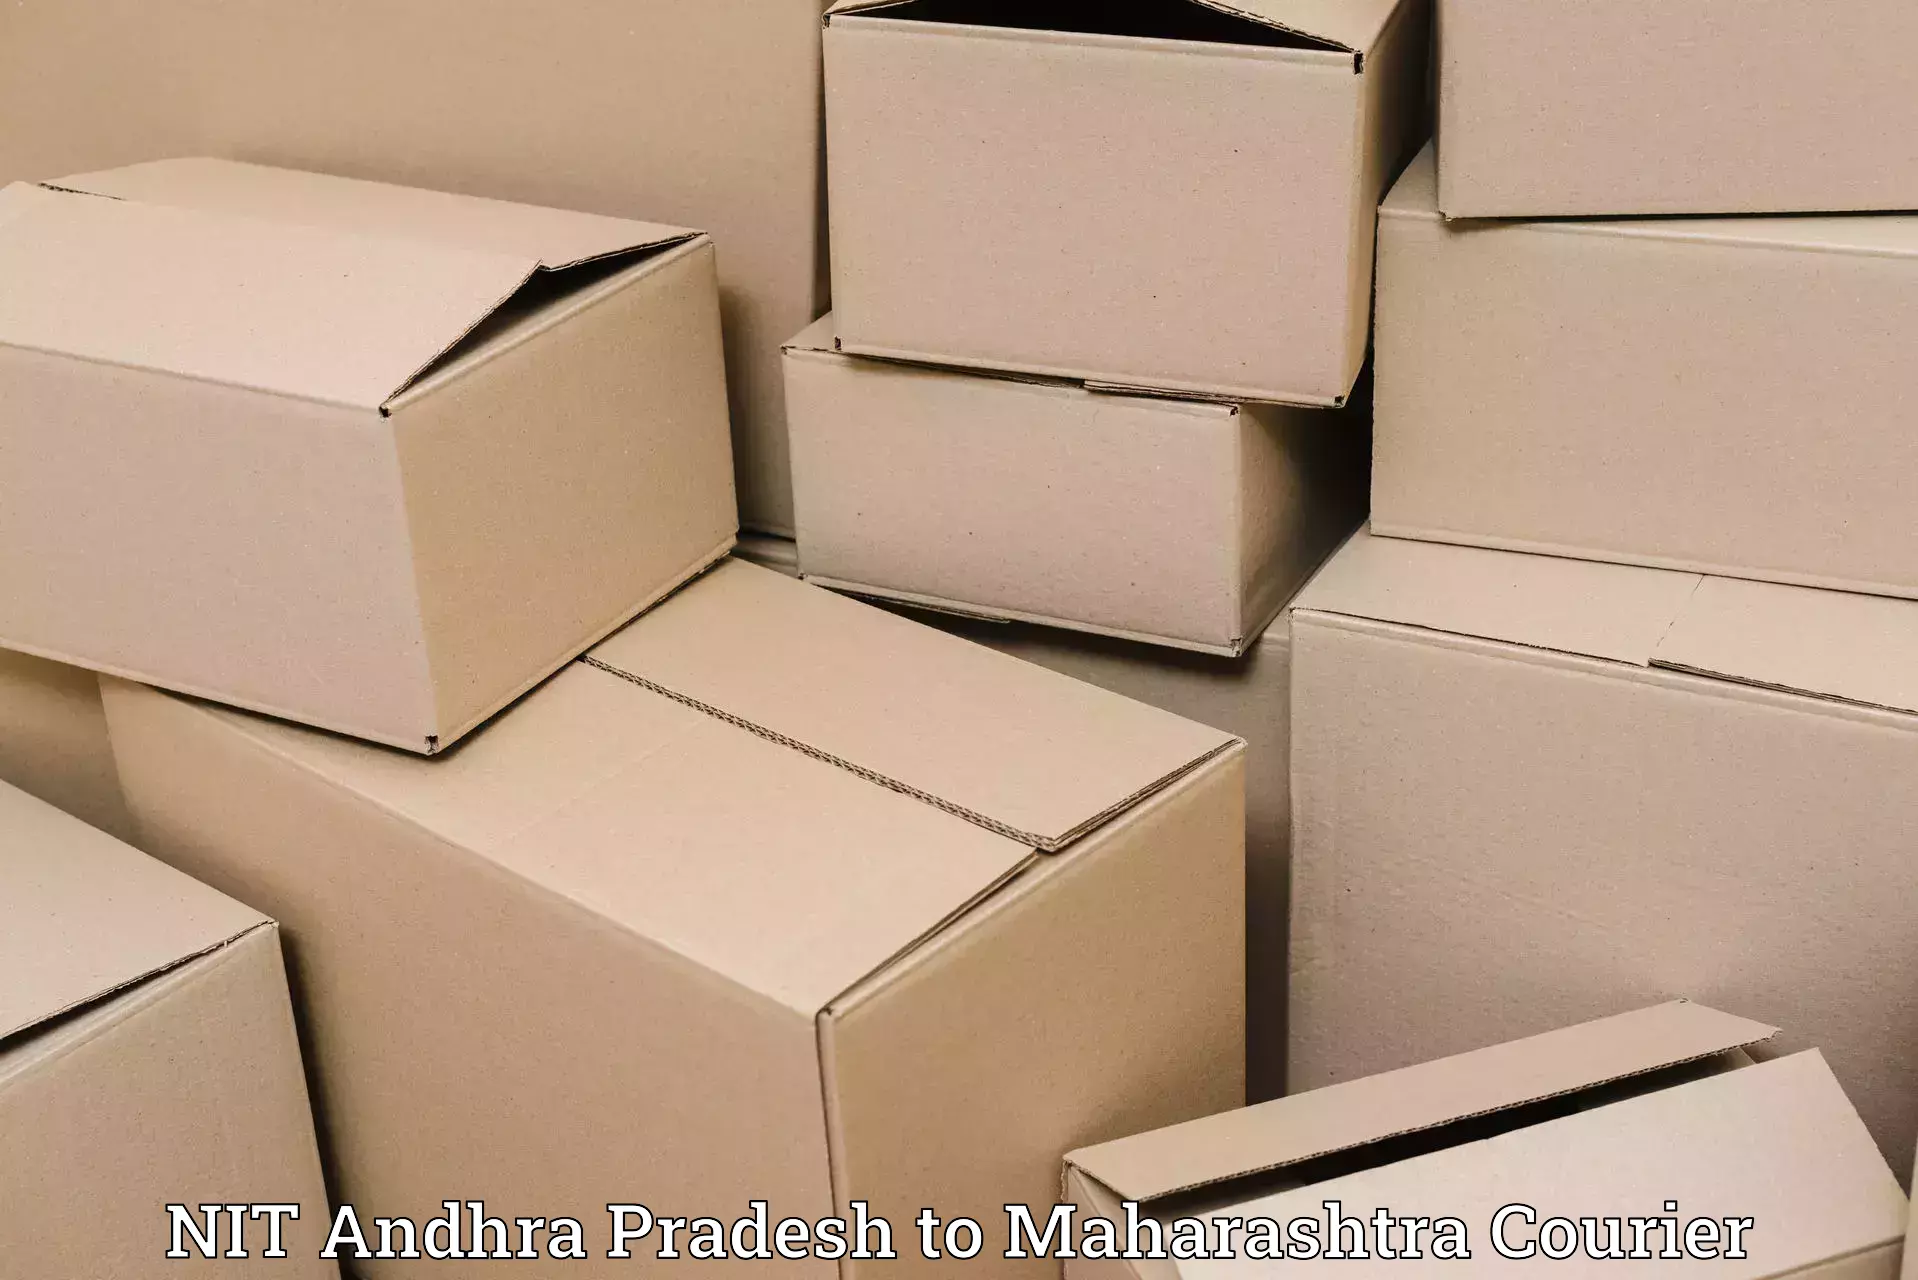 Full-service courier options NIT Andhra Pradesh to DY Patil Vidyapeeth Mumbai